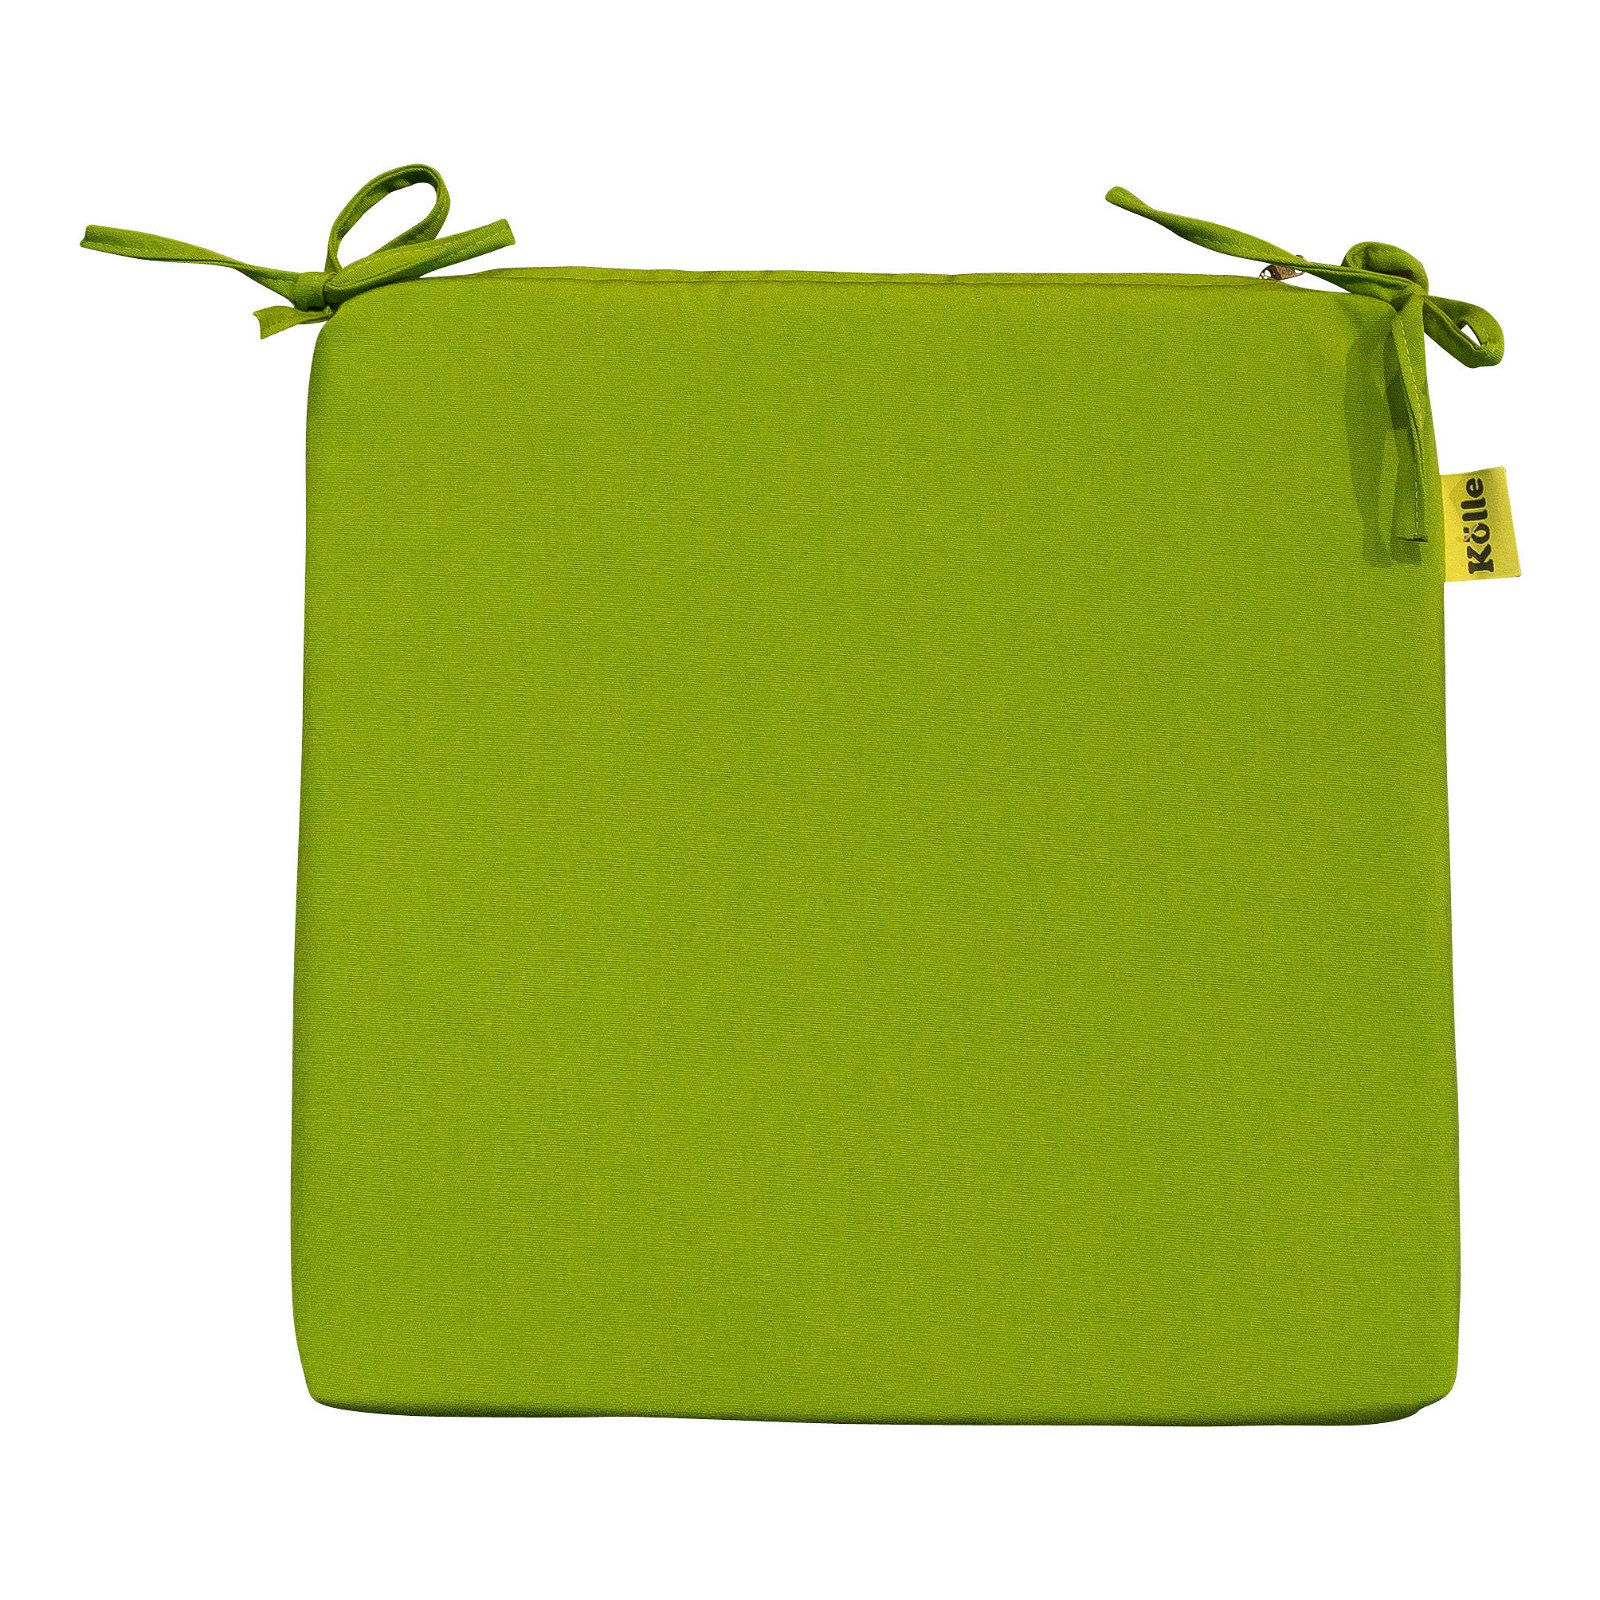 Stuhlauflage 'Bosque', grün, ca. 39 x 39 x 3,5 cm